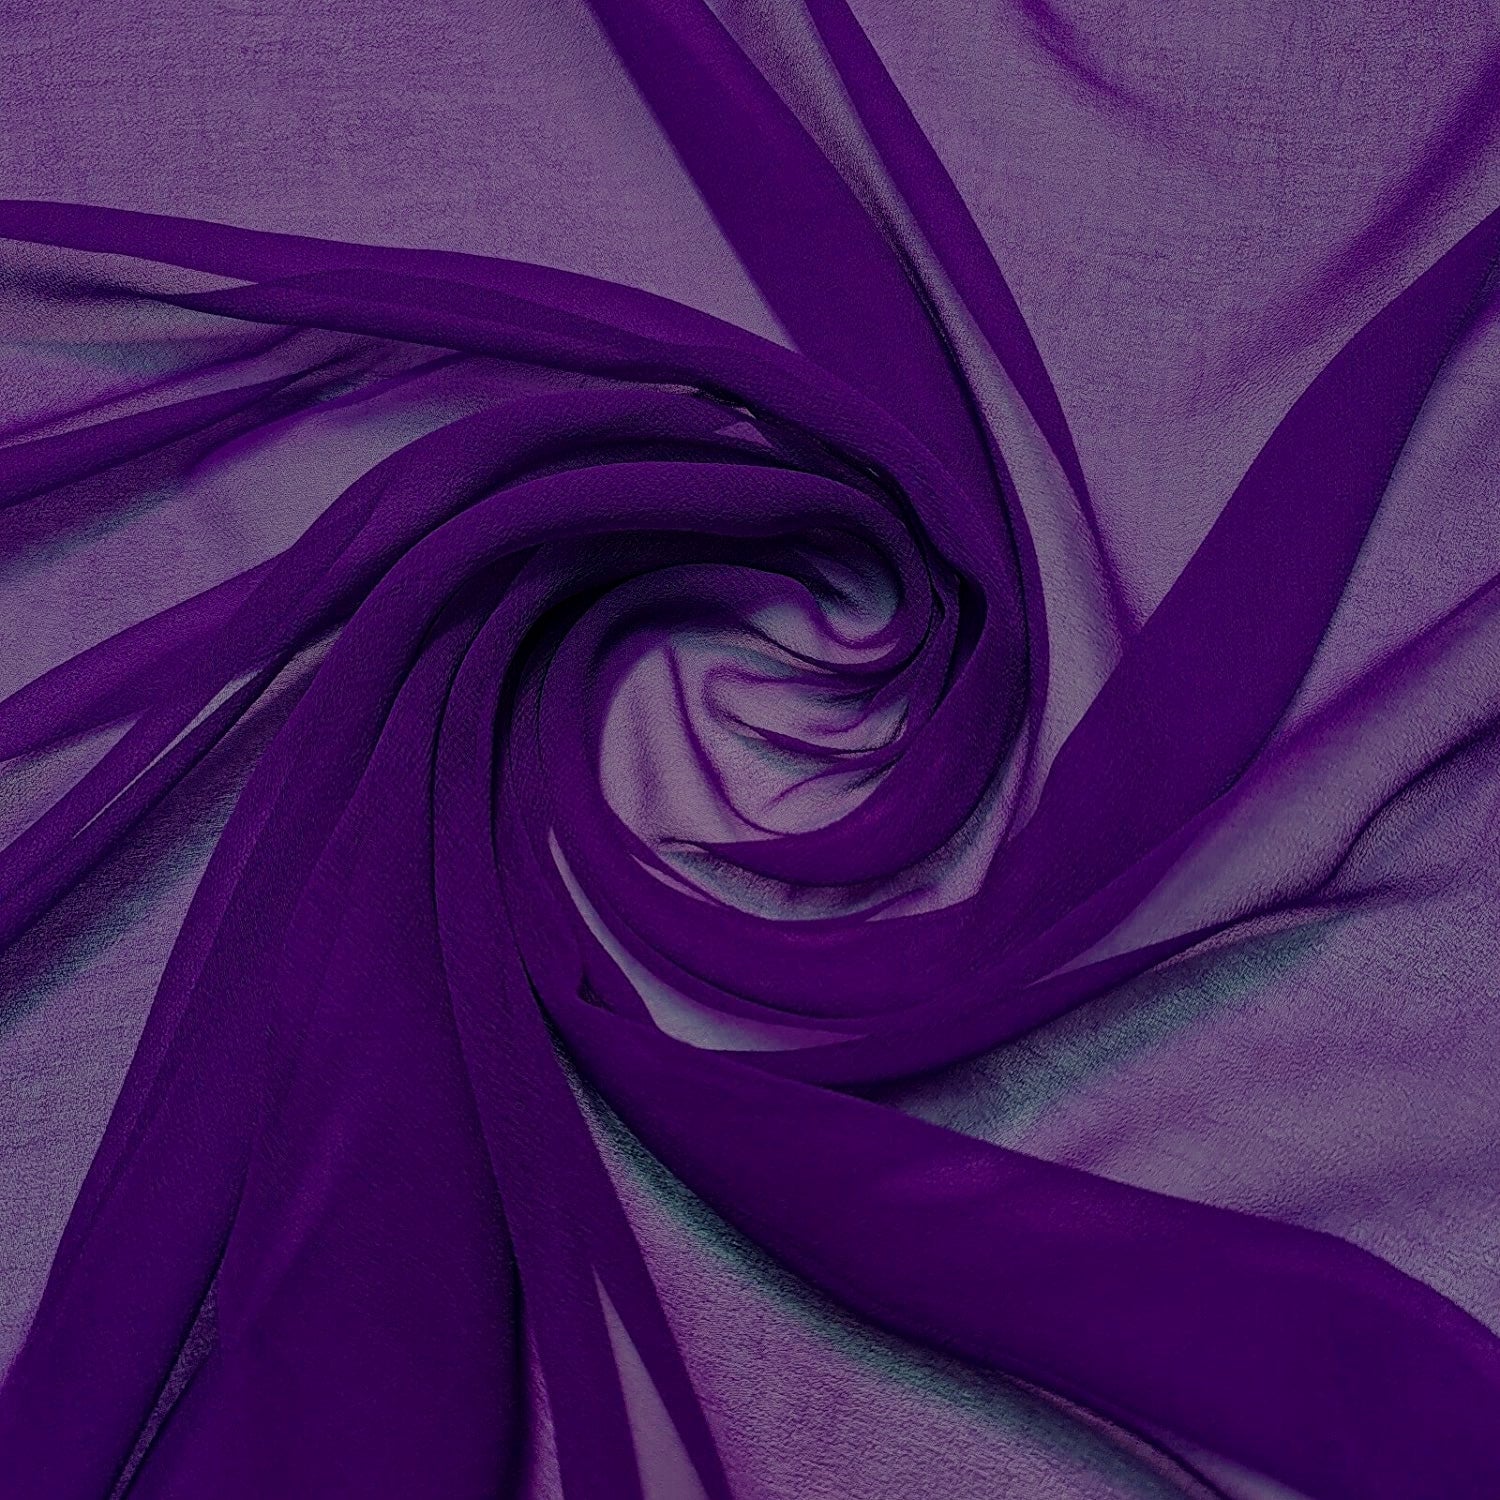 Cadbury Purple,b72dfdee-2431-45a7-ac4b-8f32cf32f35e